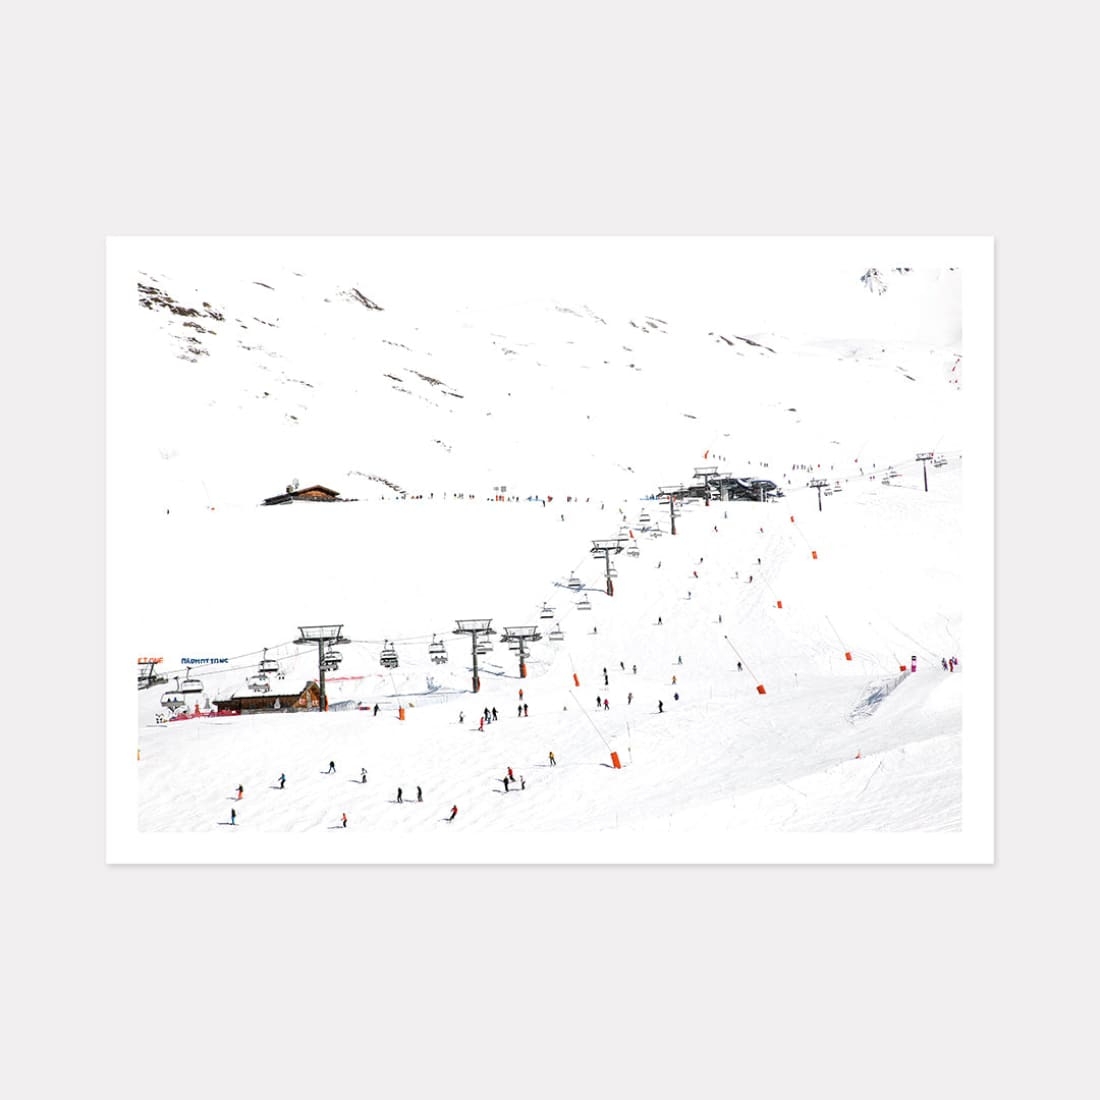 Ski Run Mountain Art Print, A3 (42cm x 29.7cm) unframed print – Powderhound